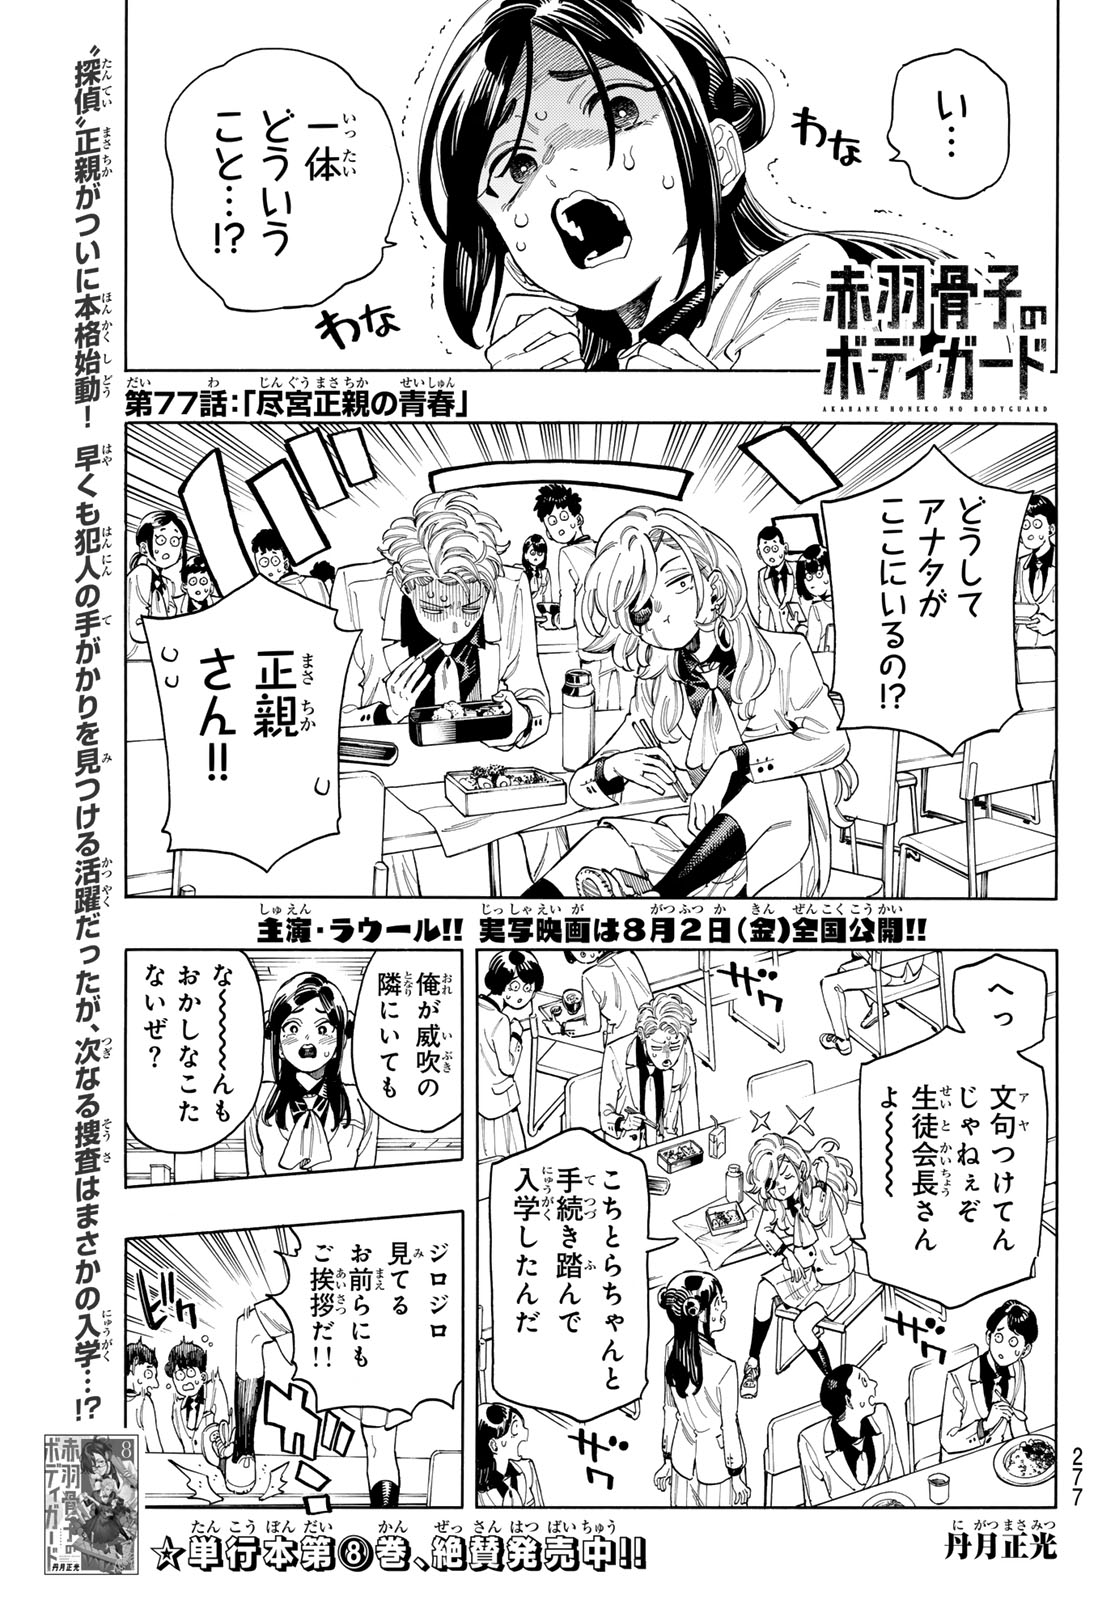 Akabane Honeko no Bodyguard - Chapter 77 - Page 1